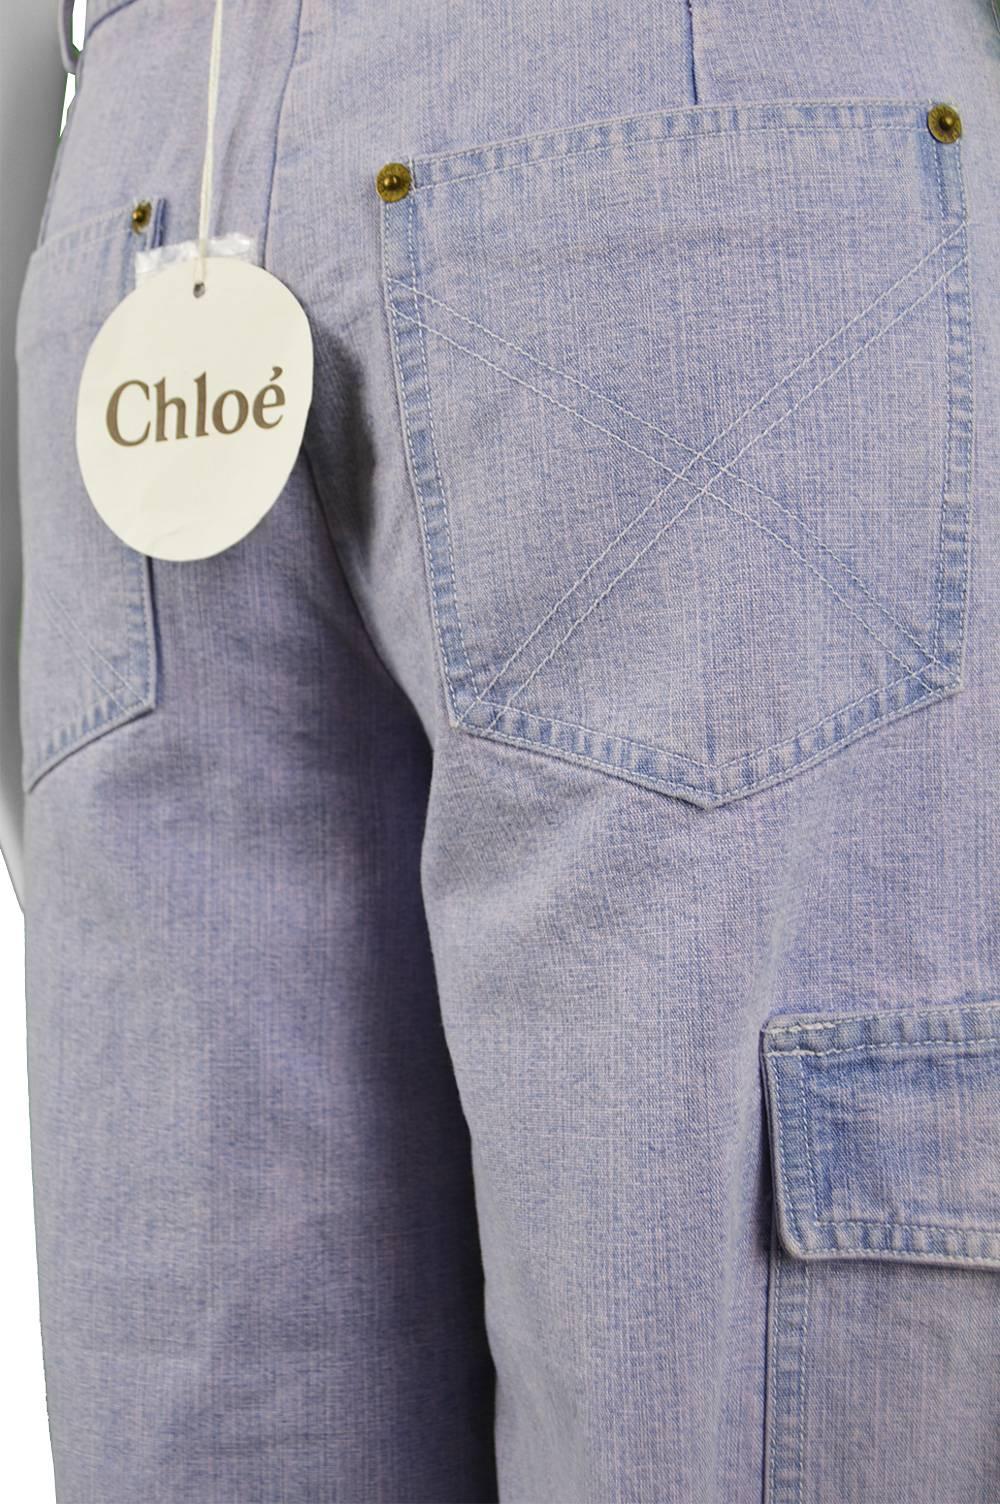 Chloé by Phoebe Philo Blue Pastel Pink Overdyed Denim Jeans / Shorts, S / S 2002 4